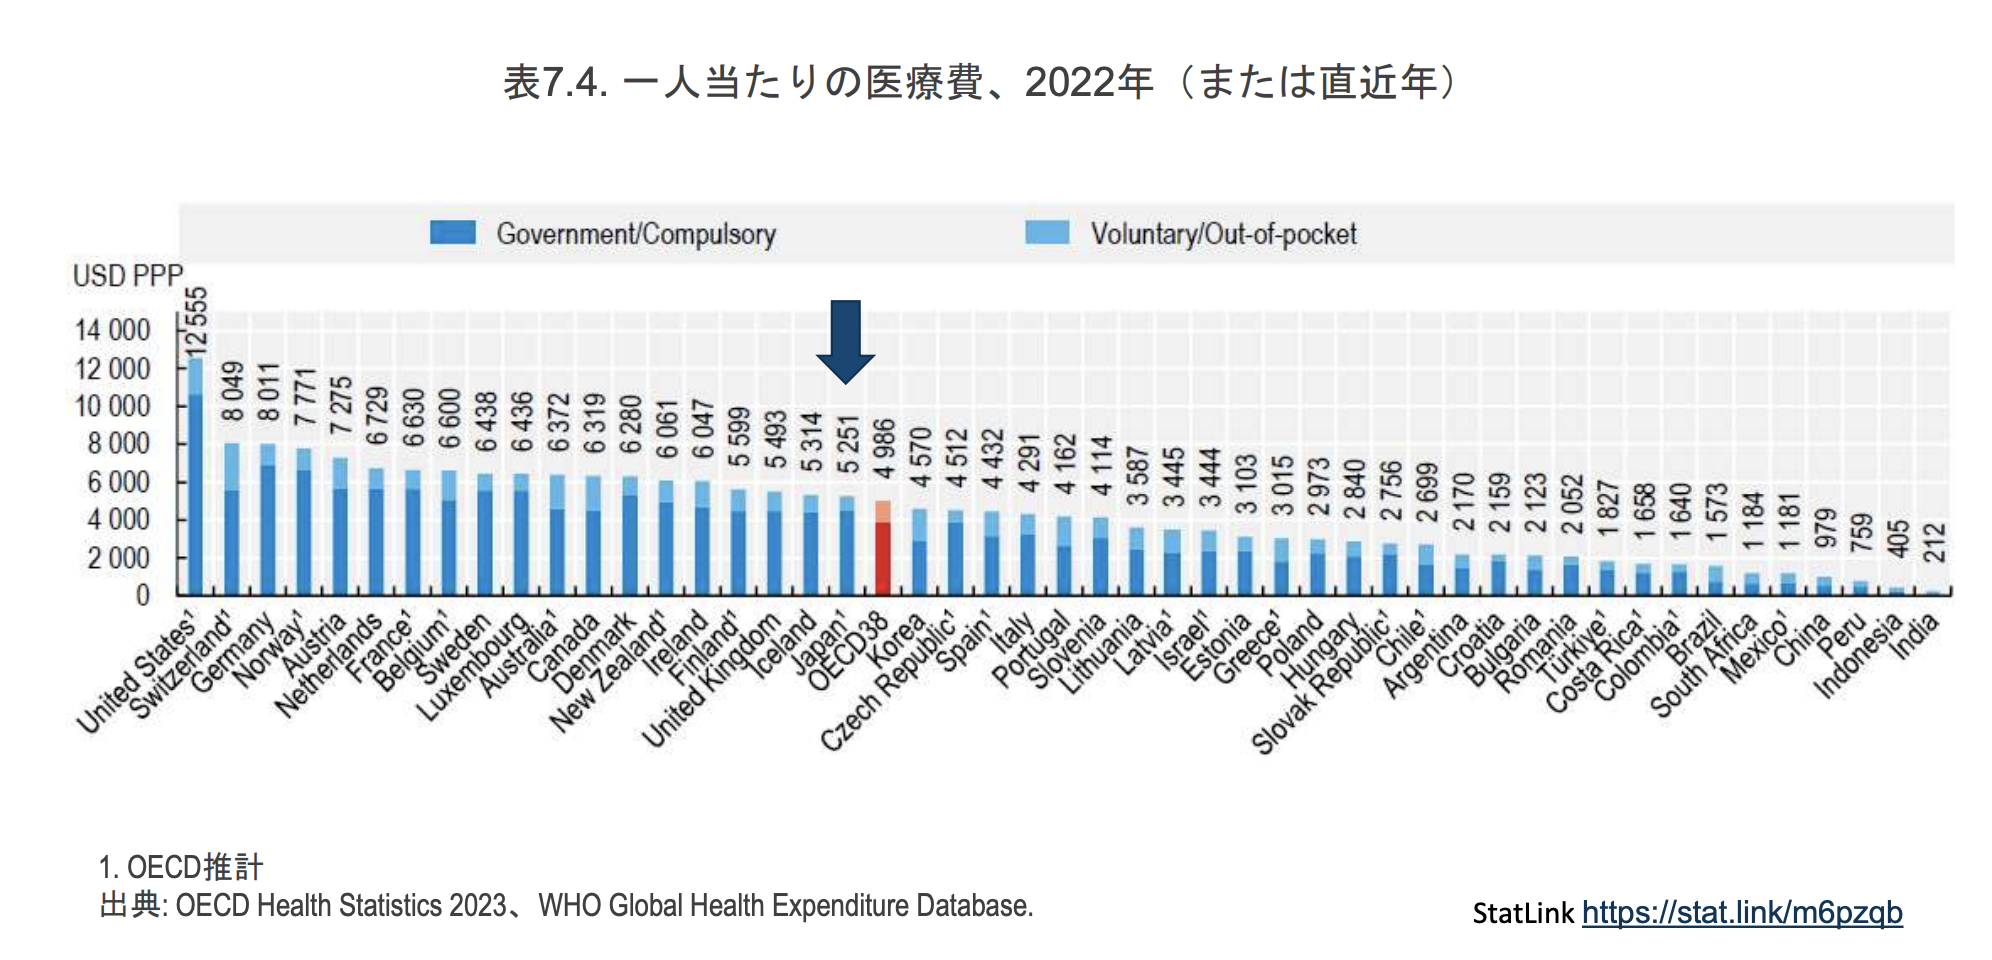 OECD加盟国の一人当たり医療費ランクング。アメリカは一位。